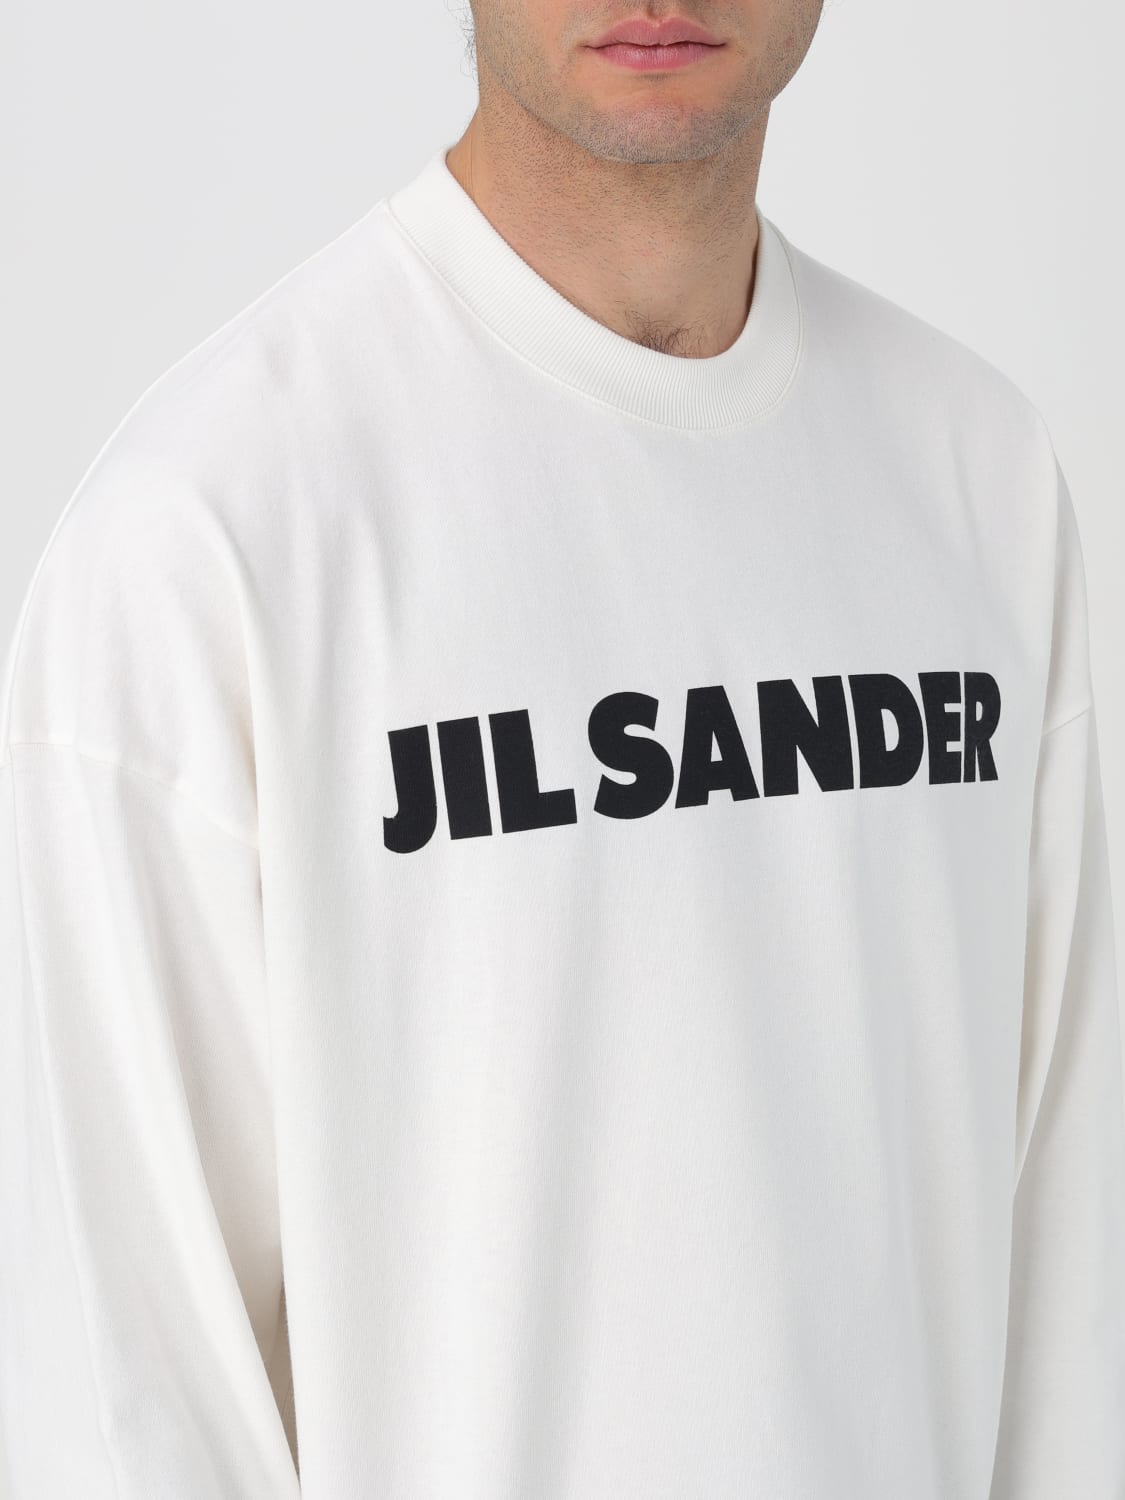 T-shirt men Jil Sander